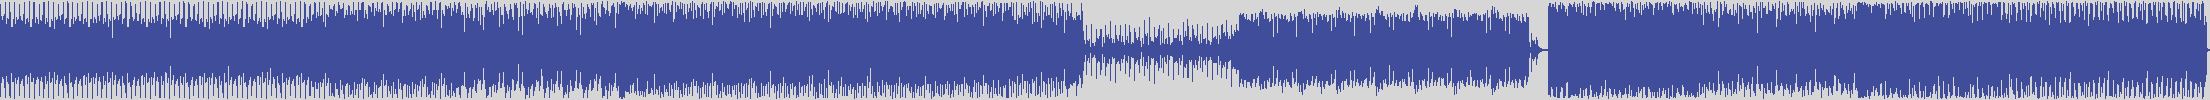 nf_boyz_records [NFY053] Jona Wilmer - Face On [Original Mix] audio wave form